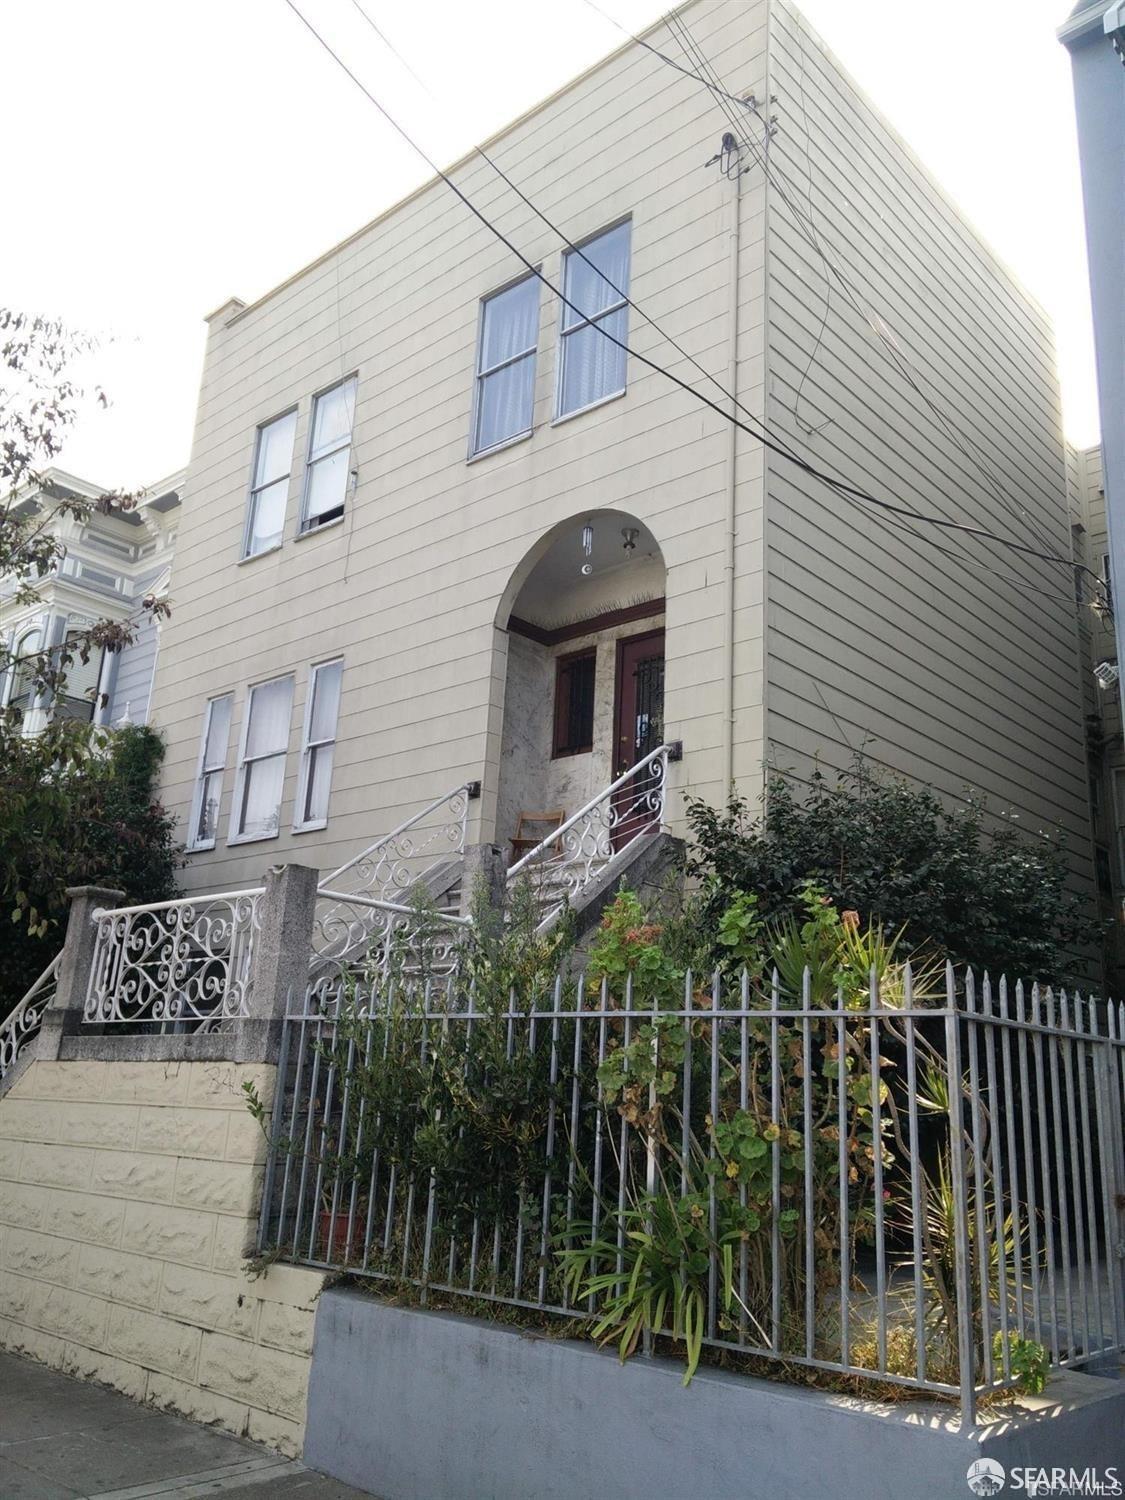 Photo of 1358 Van Ness Ave in San Francisco, CA